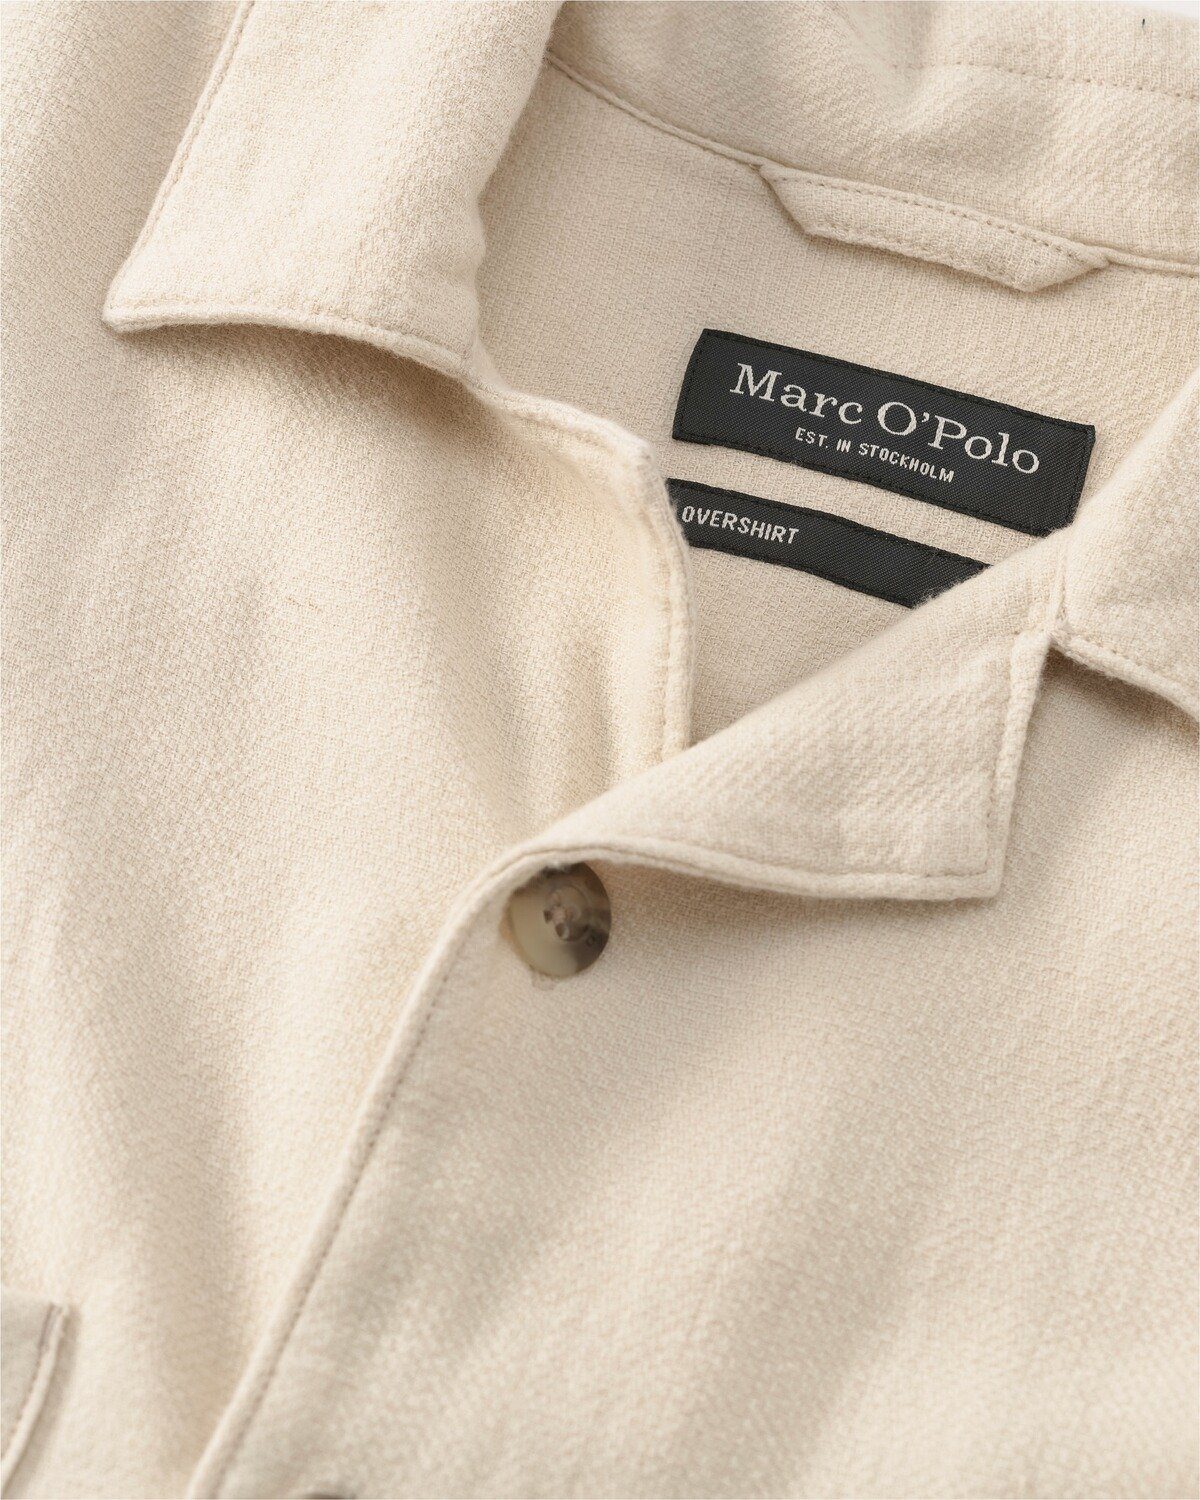 O'Polo Kurzjacke Marc Overshirt